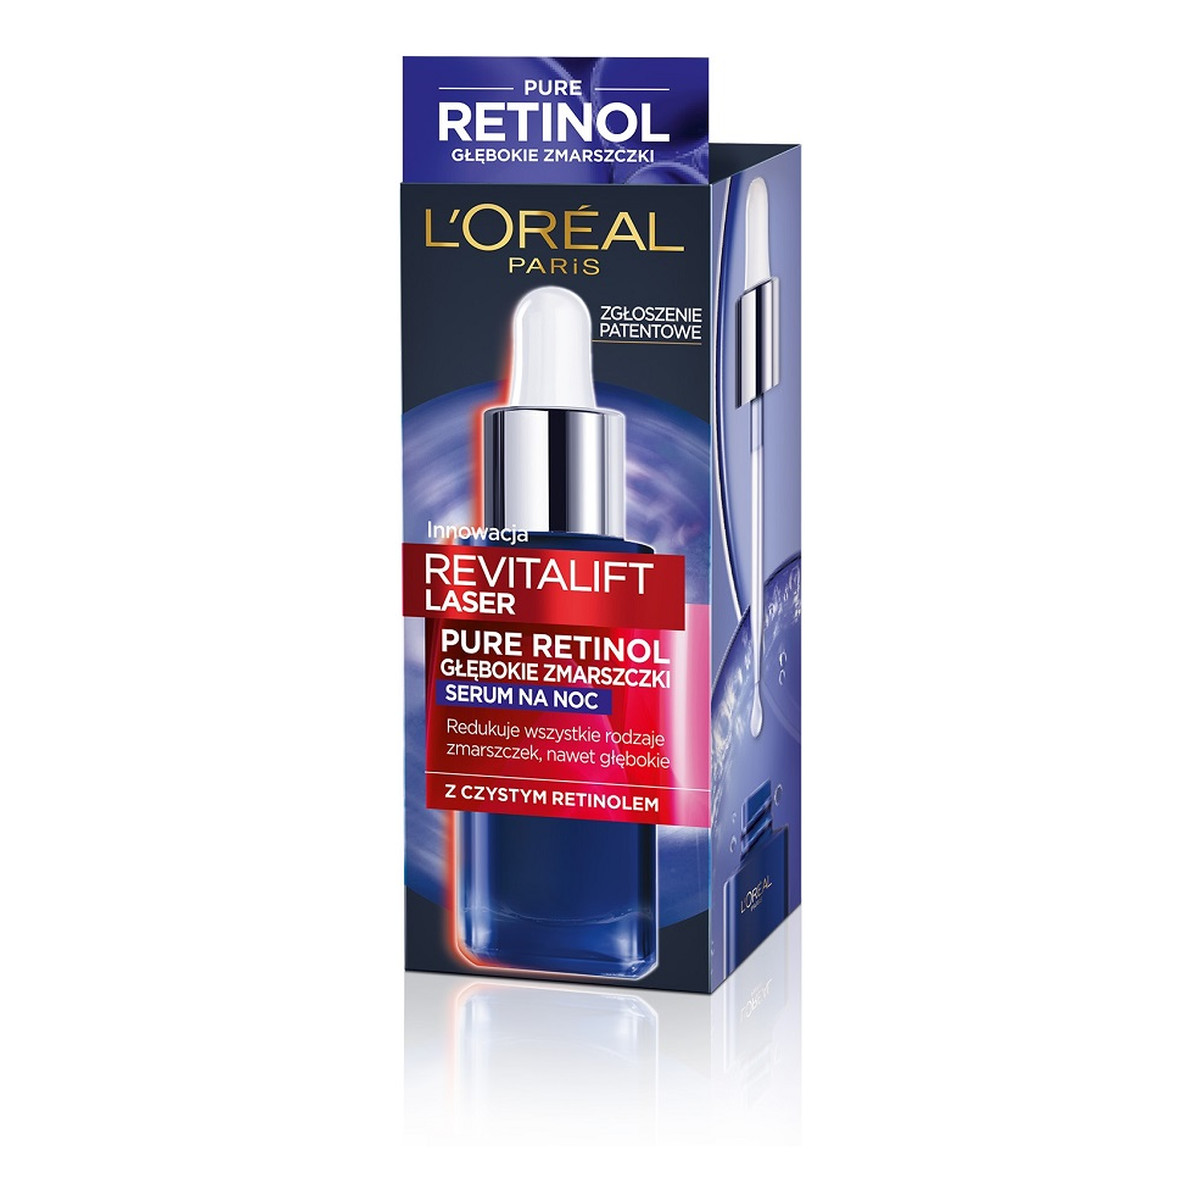 L'Oreal Paris Revitalift Laser Pure Retinol Przeciwzmarszczkowe serum na noc 30ml